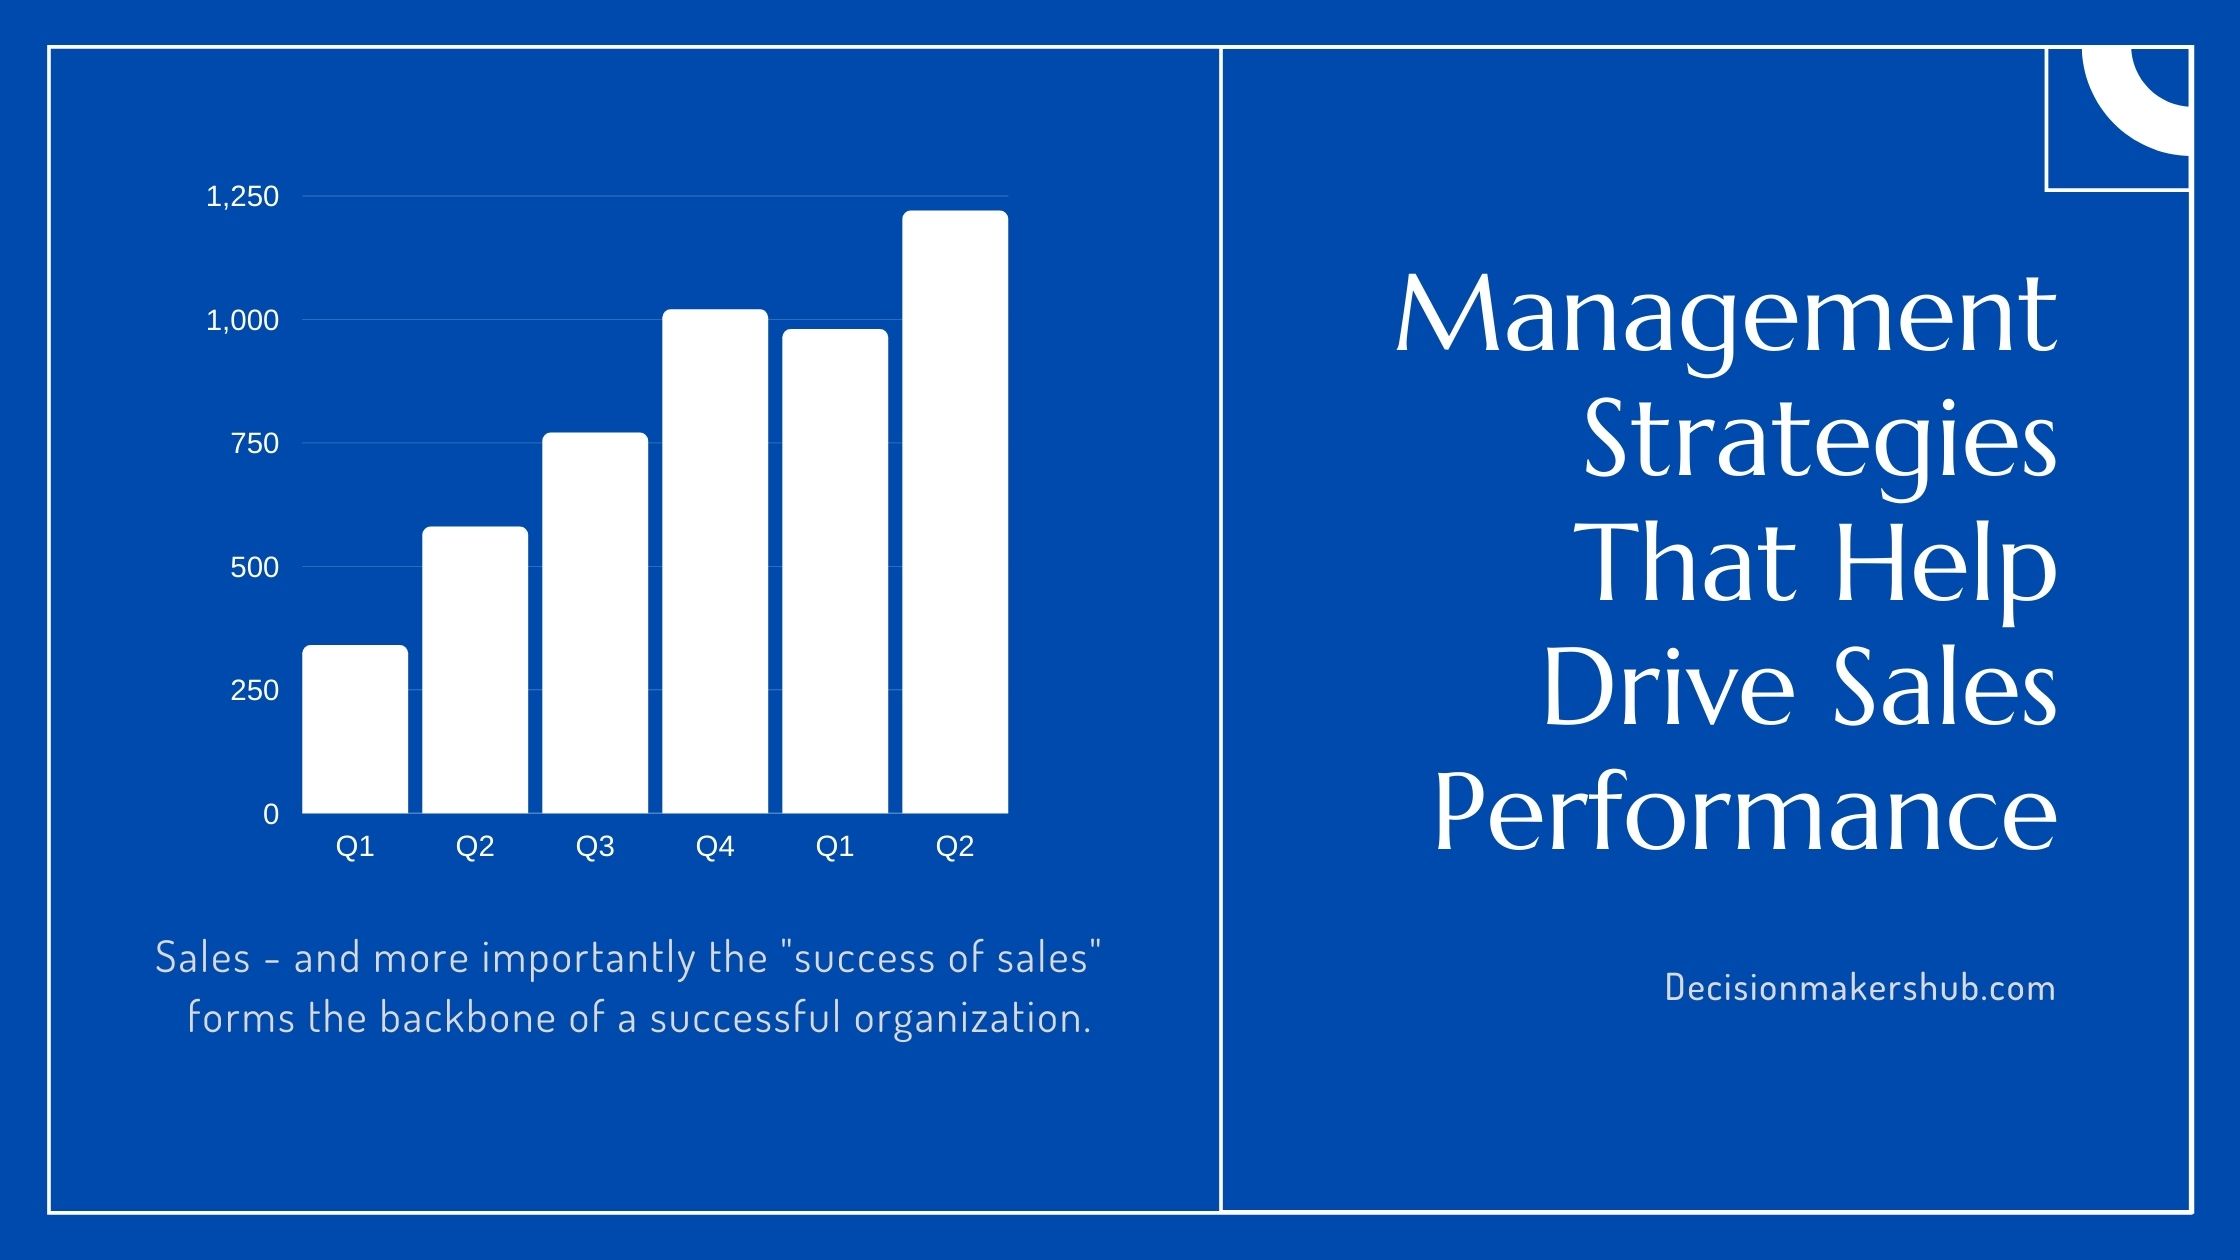 Management Strategies That Help Drive Sales Performance